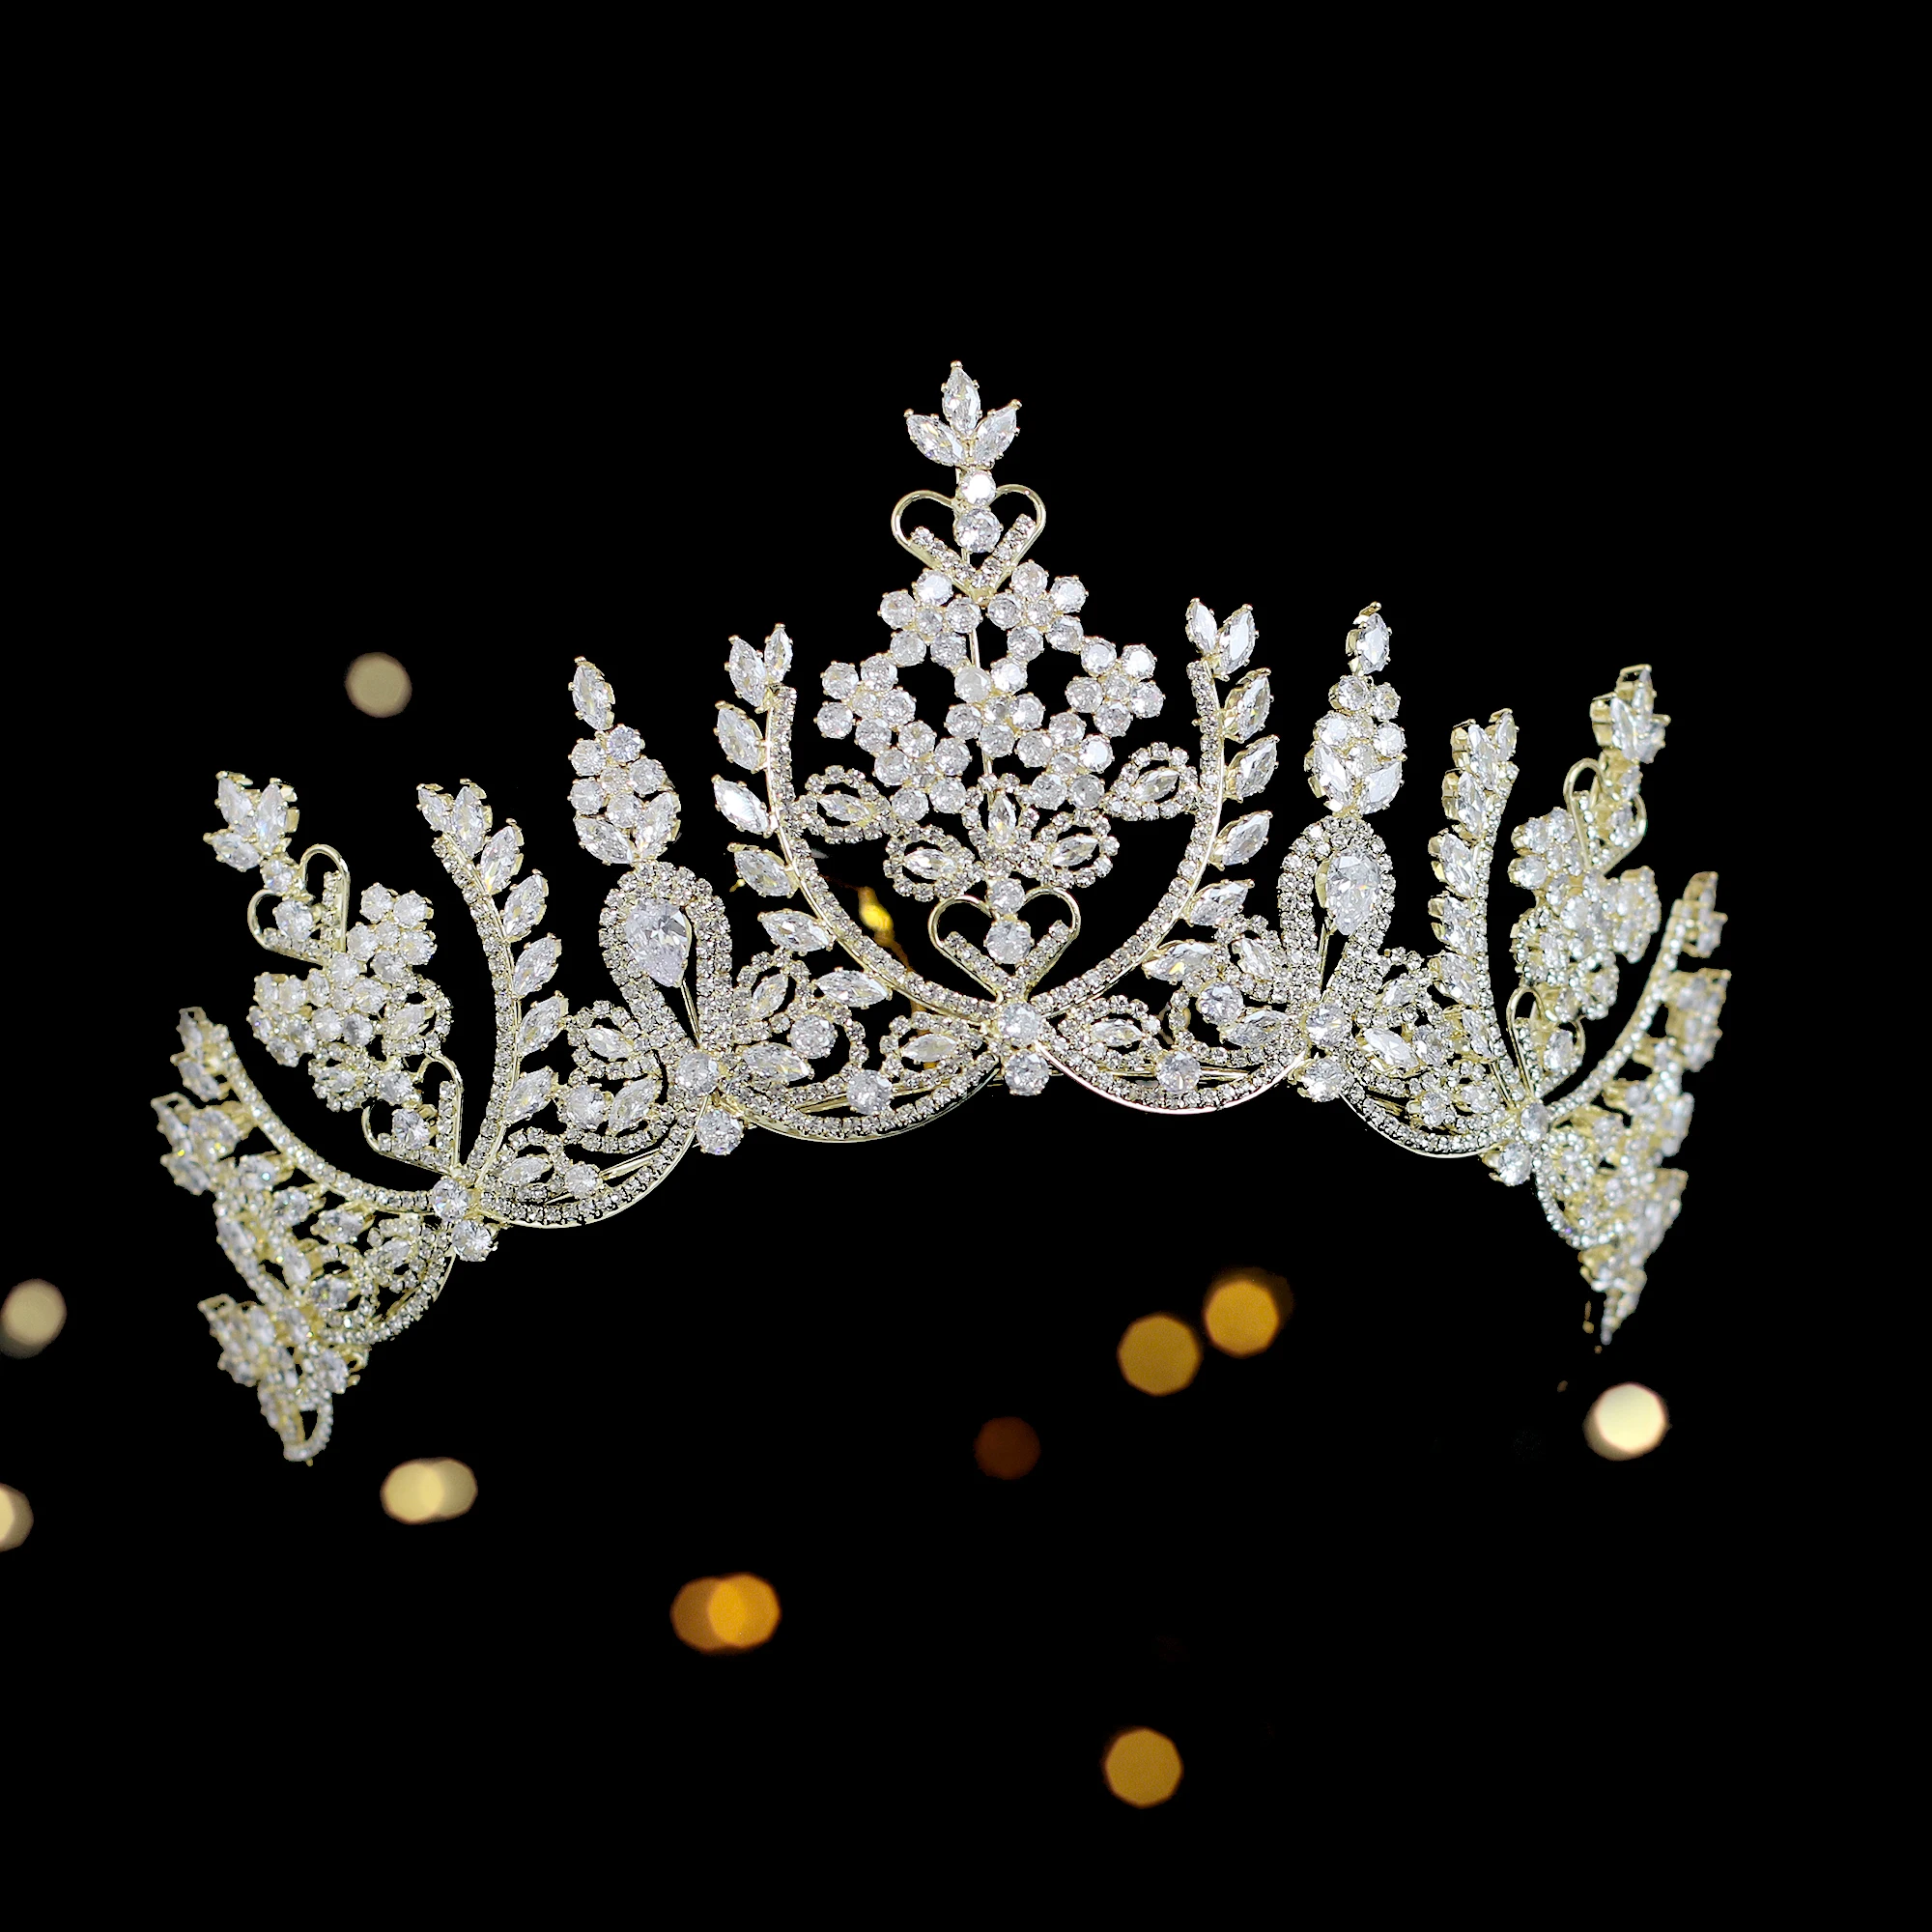 Zirconia Bride Luxury Crowns And High Quality Wedding Tiara Crown Bridal Cubic Zirconia Buy